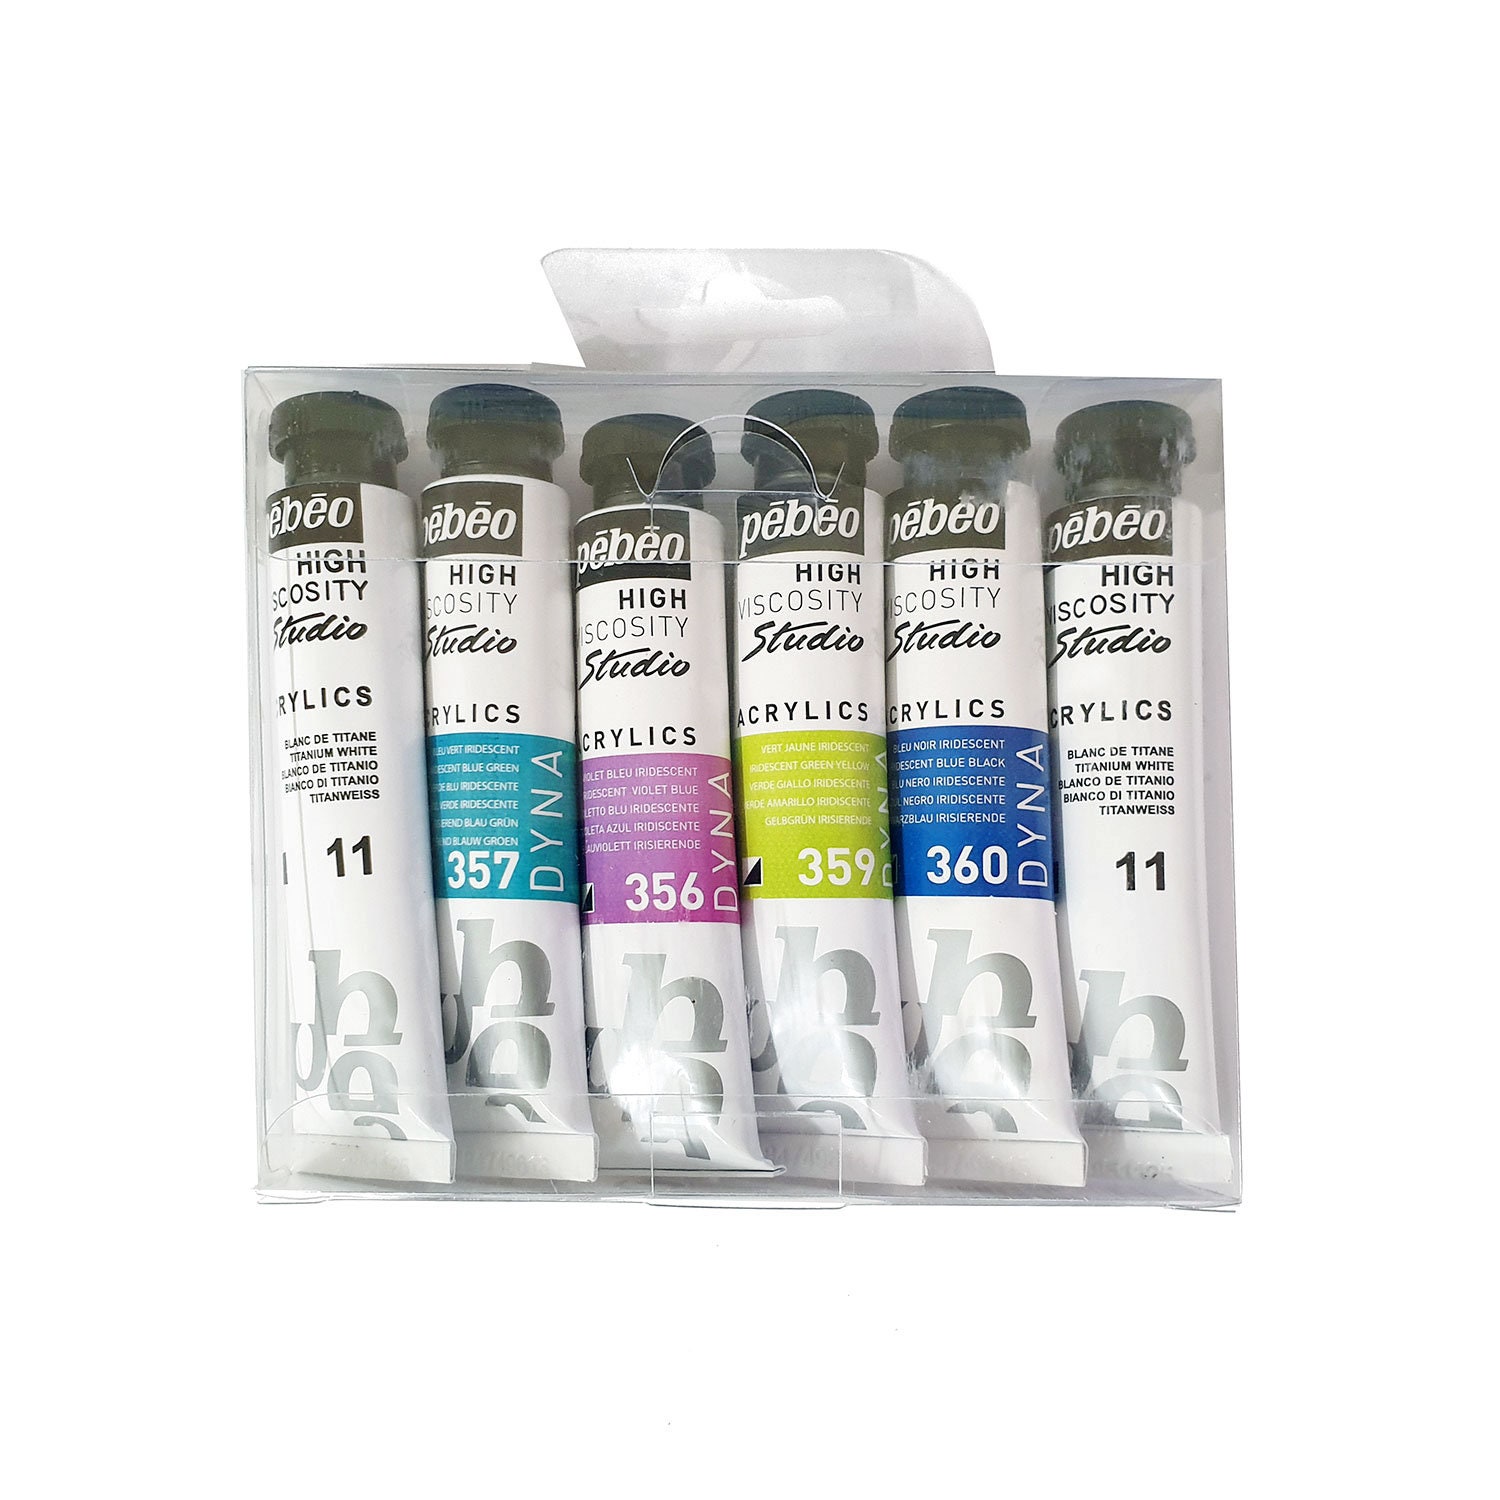 Iridescent Paint Splatters: Seamless Iridescent Paint Splatters